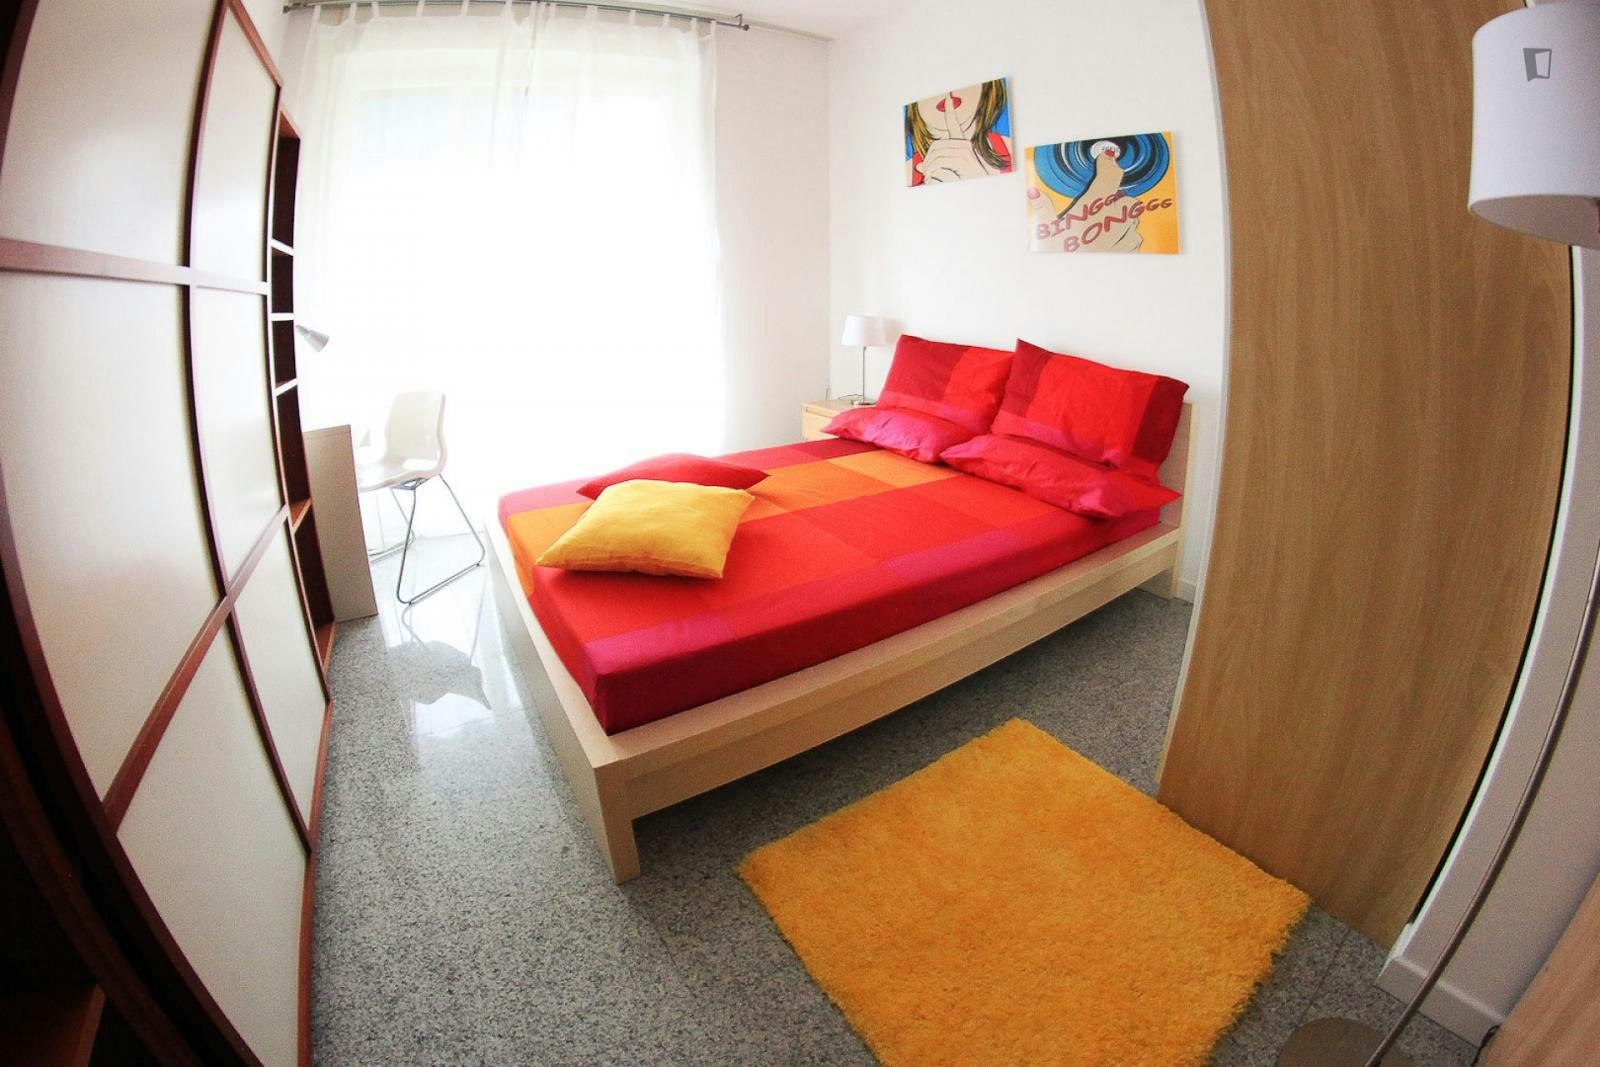 Warm and cosy double bedroom in the Stadio San Siro neighbourhood